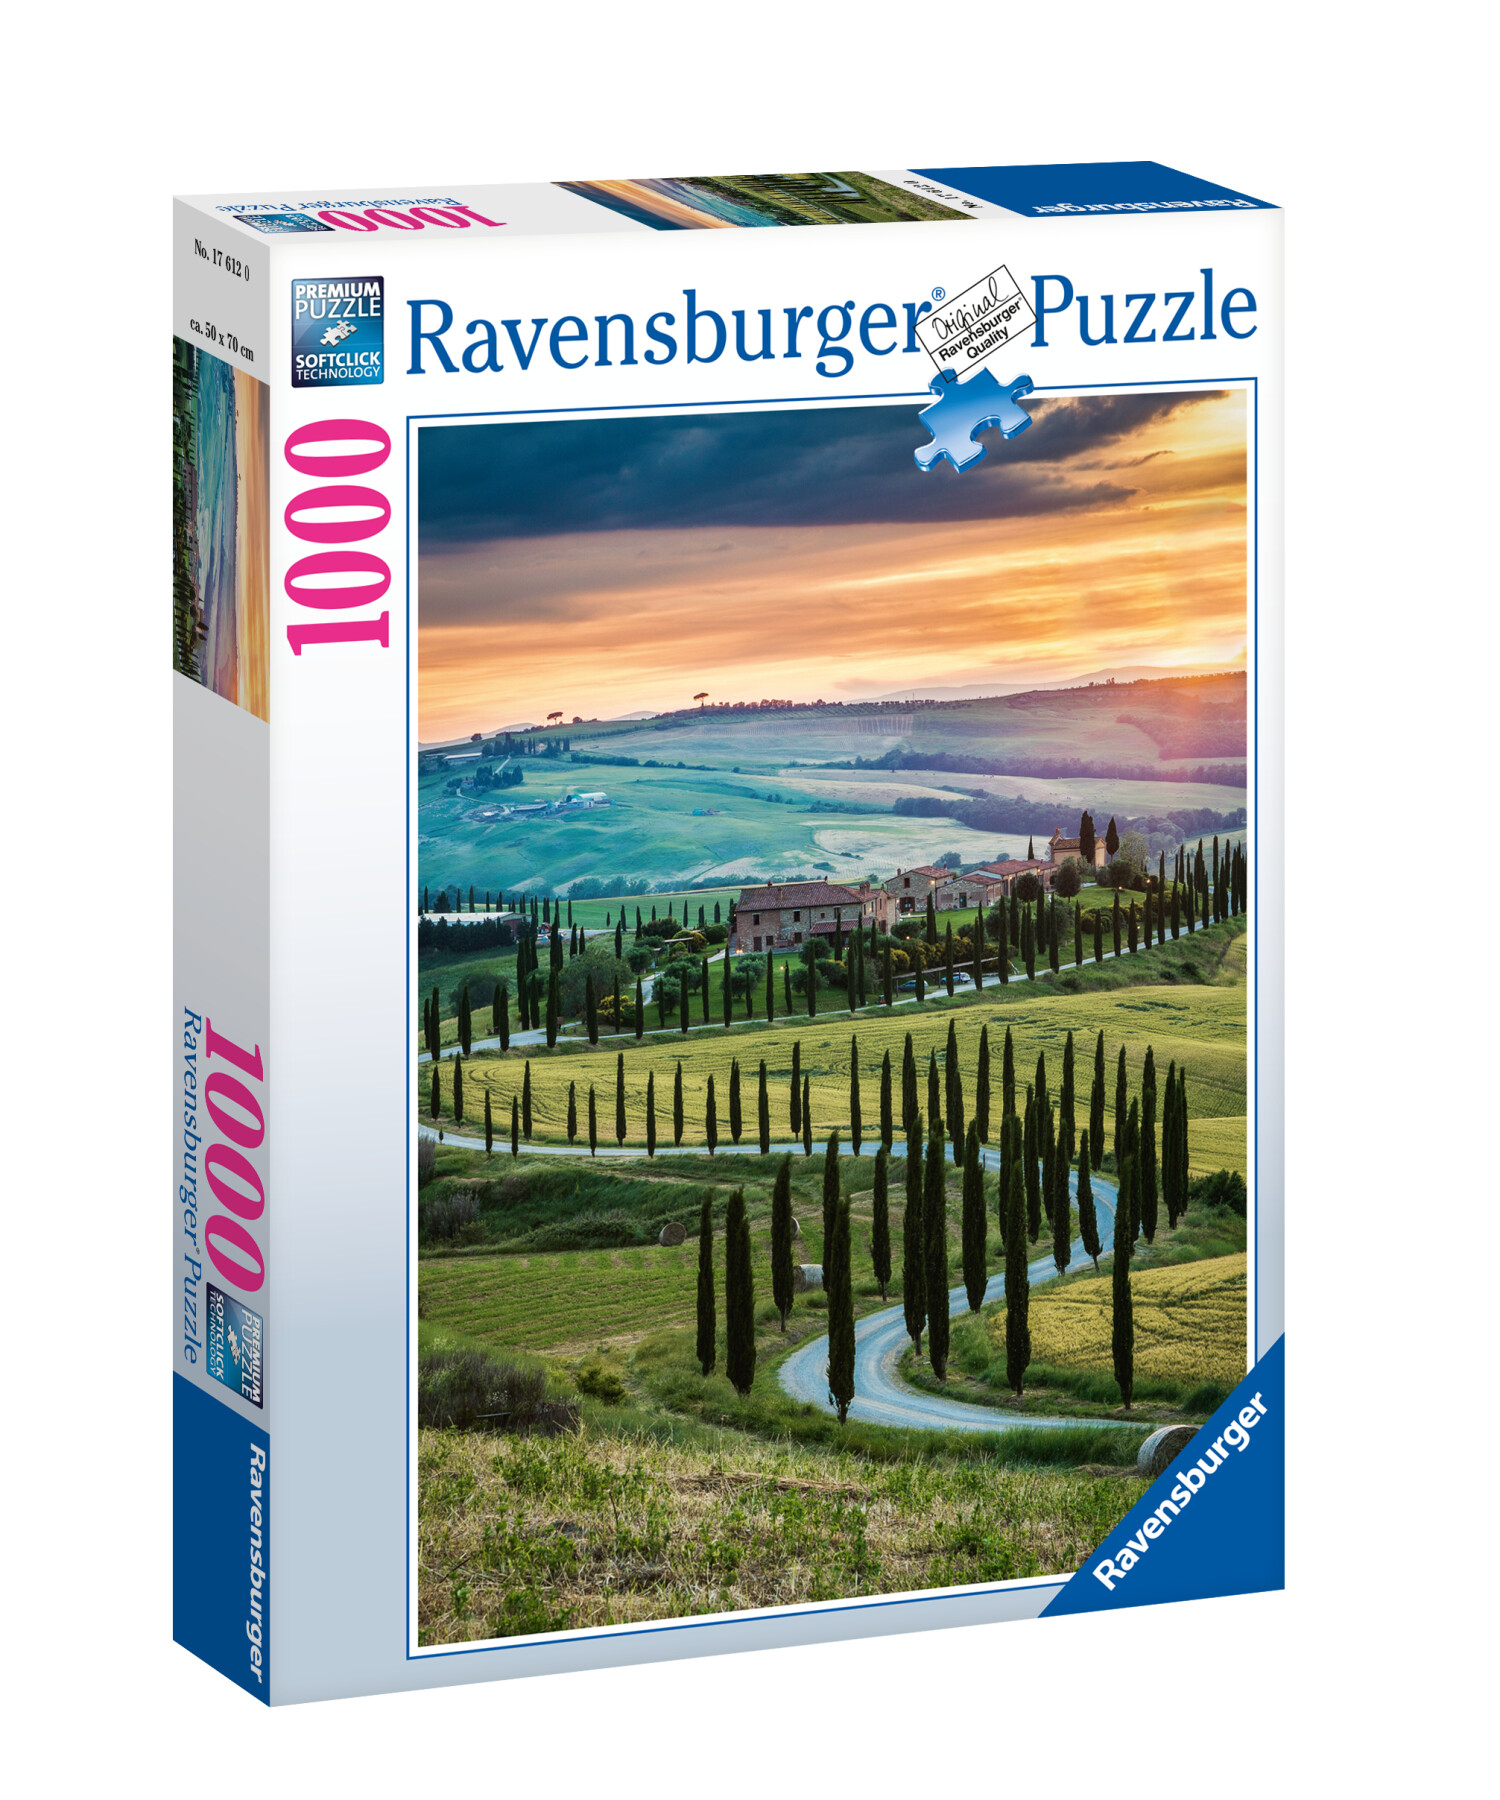 Ravensburger - puzzle val d'orcia, toscana, 1000 pezzi, puzzle adulti - RAVENSBURGER